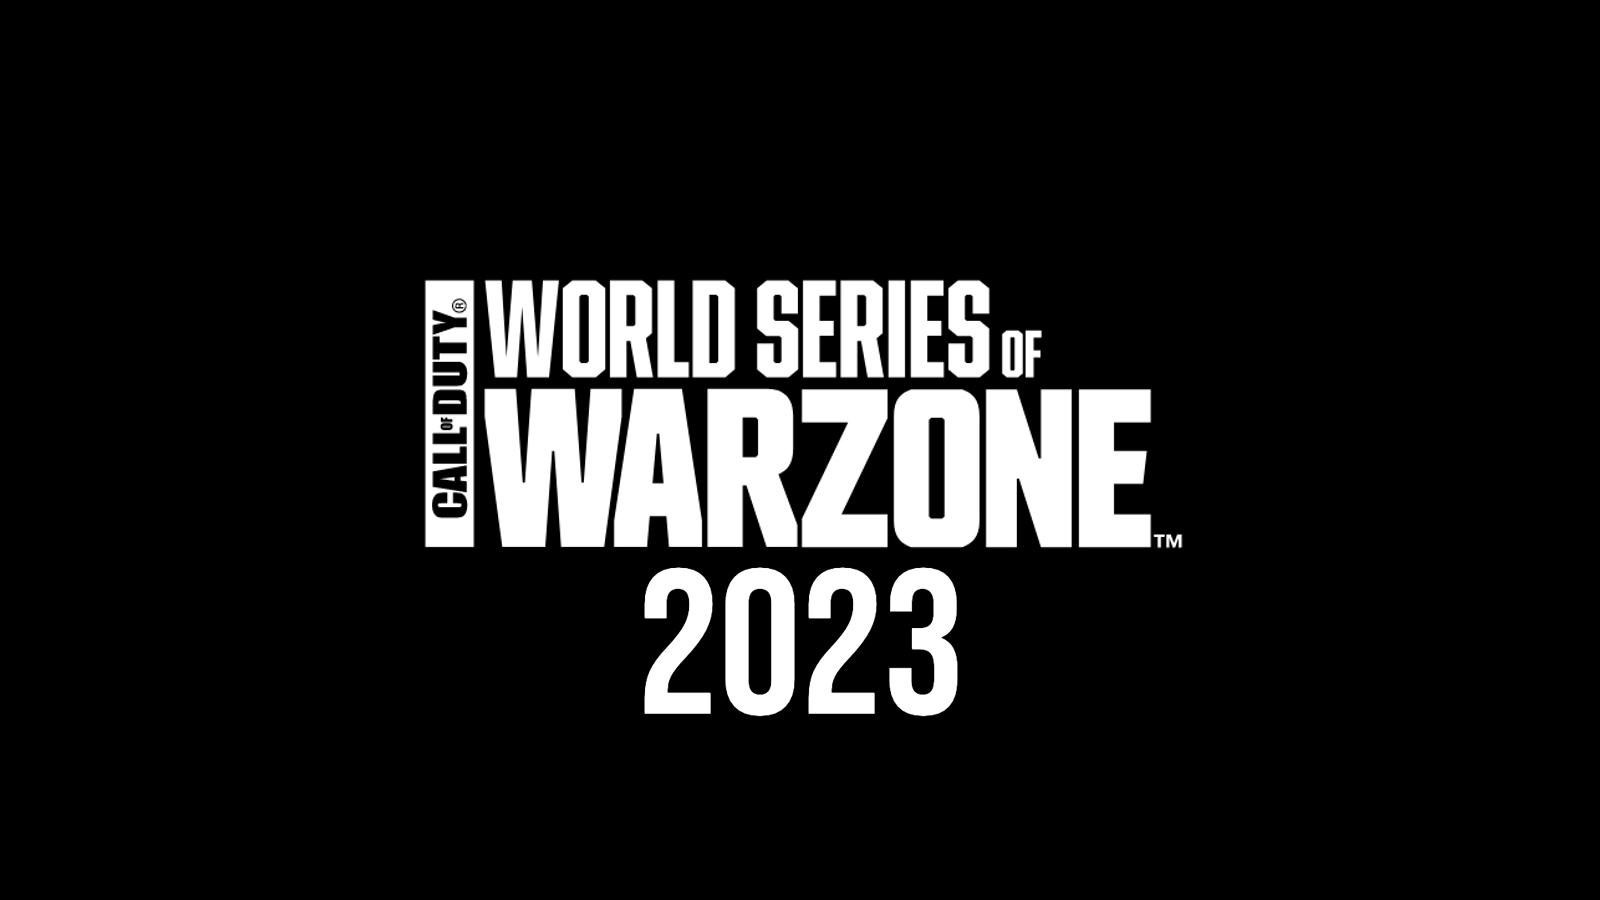 world series of warzone 2023 logo on black background